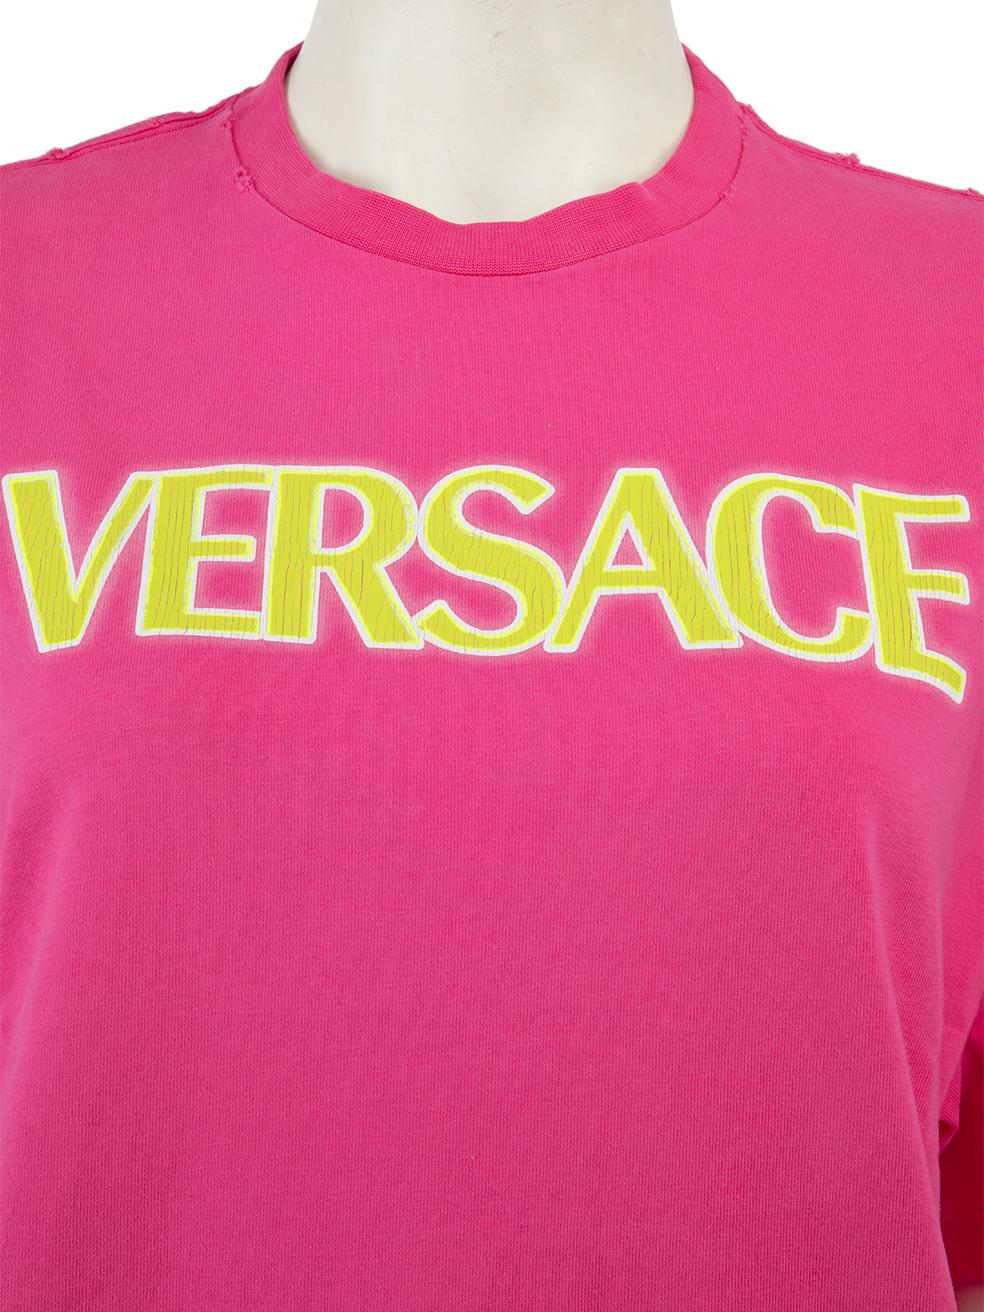 Women's Versace Pink Vintage Wash Effect Logo T-Shirt Size XS For Sale